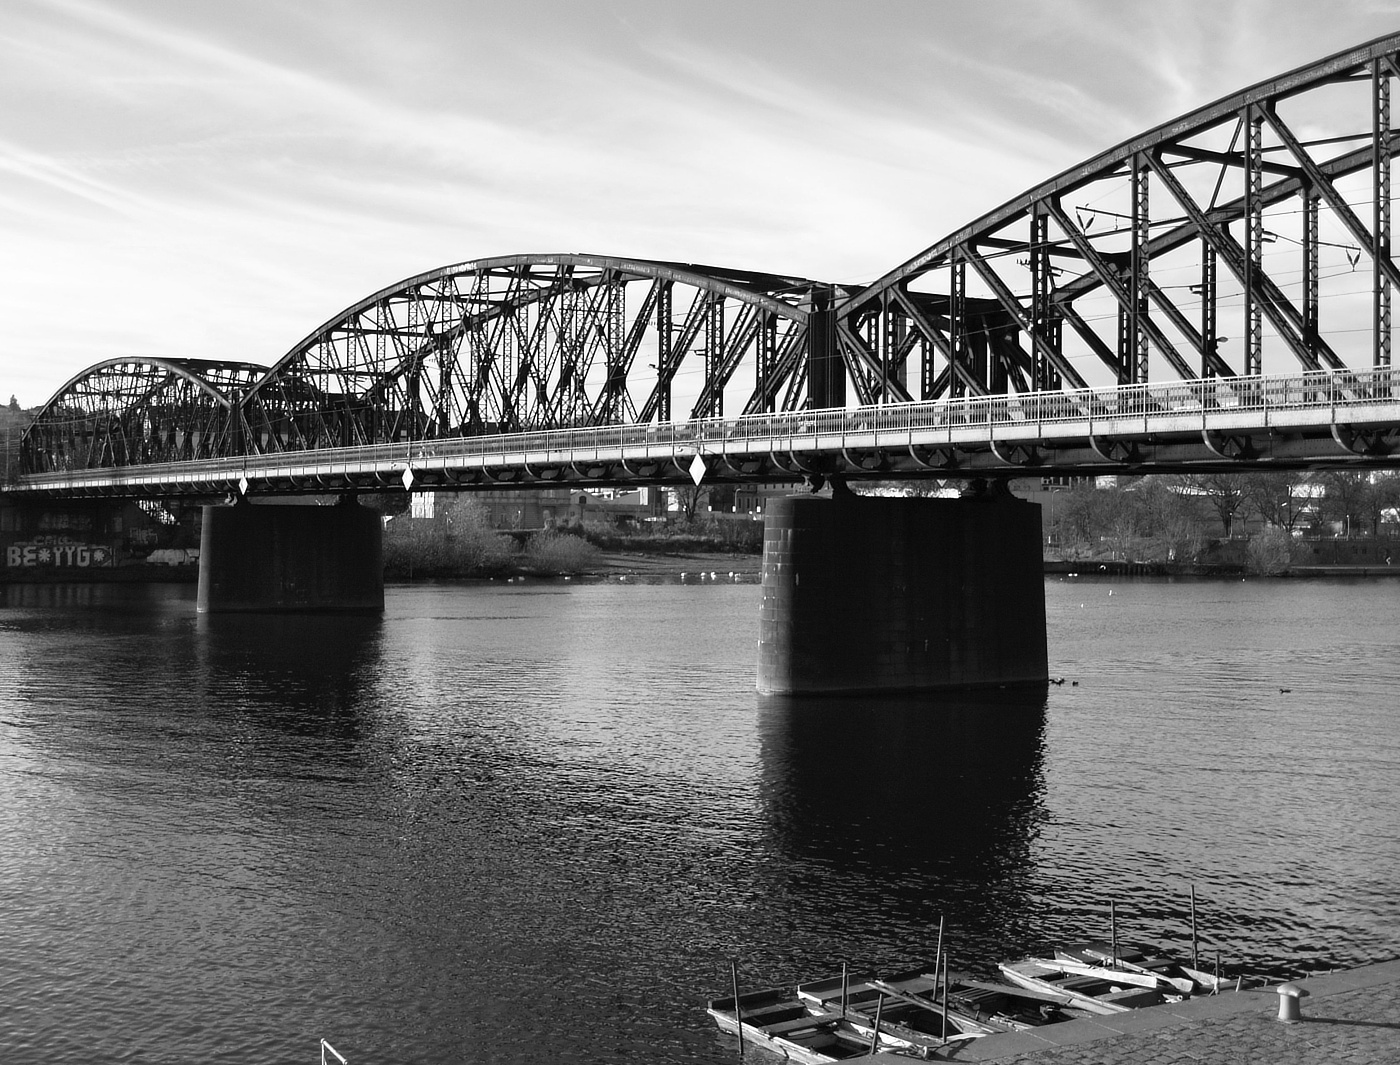 The Bridge On The River Vltava